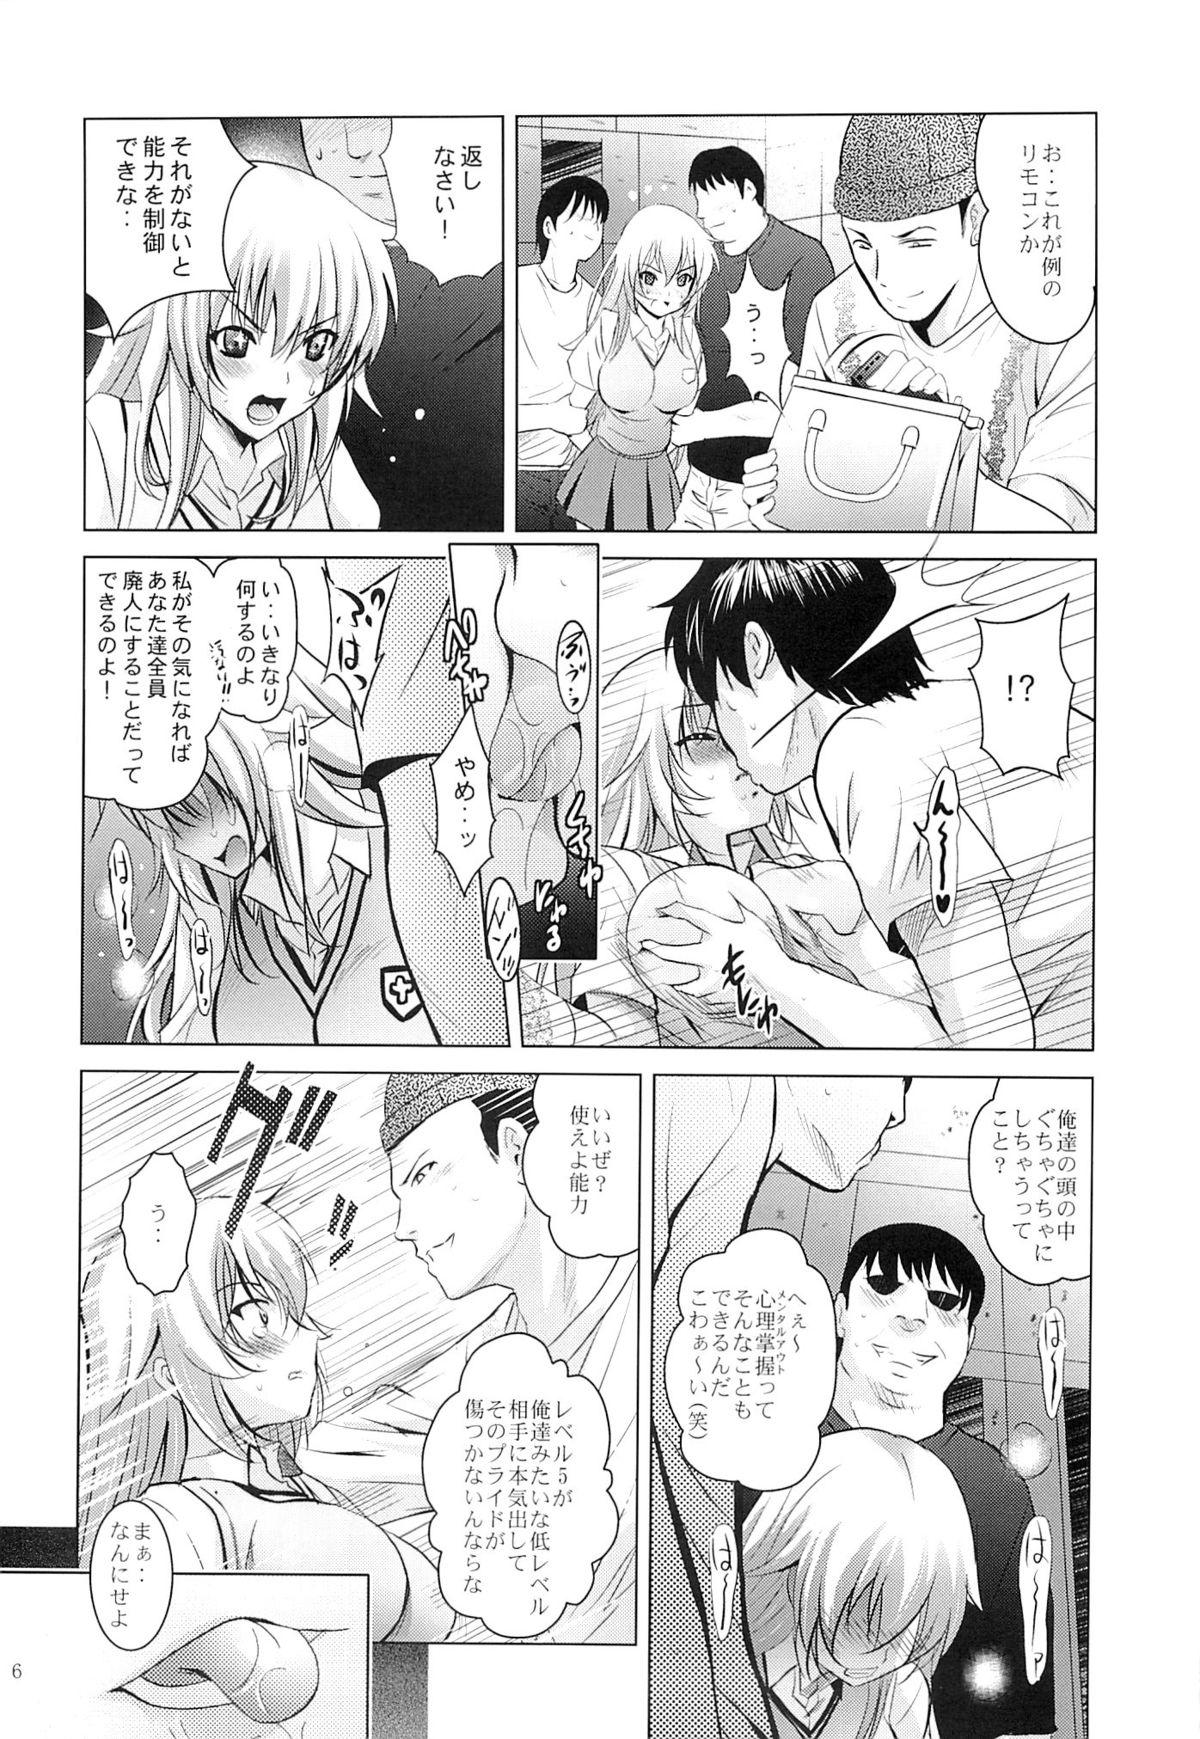 Bdsm MOUSOU THEATER 41 - Toaru majutsu no index Sharing - Page 5